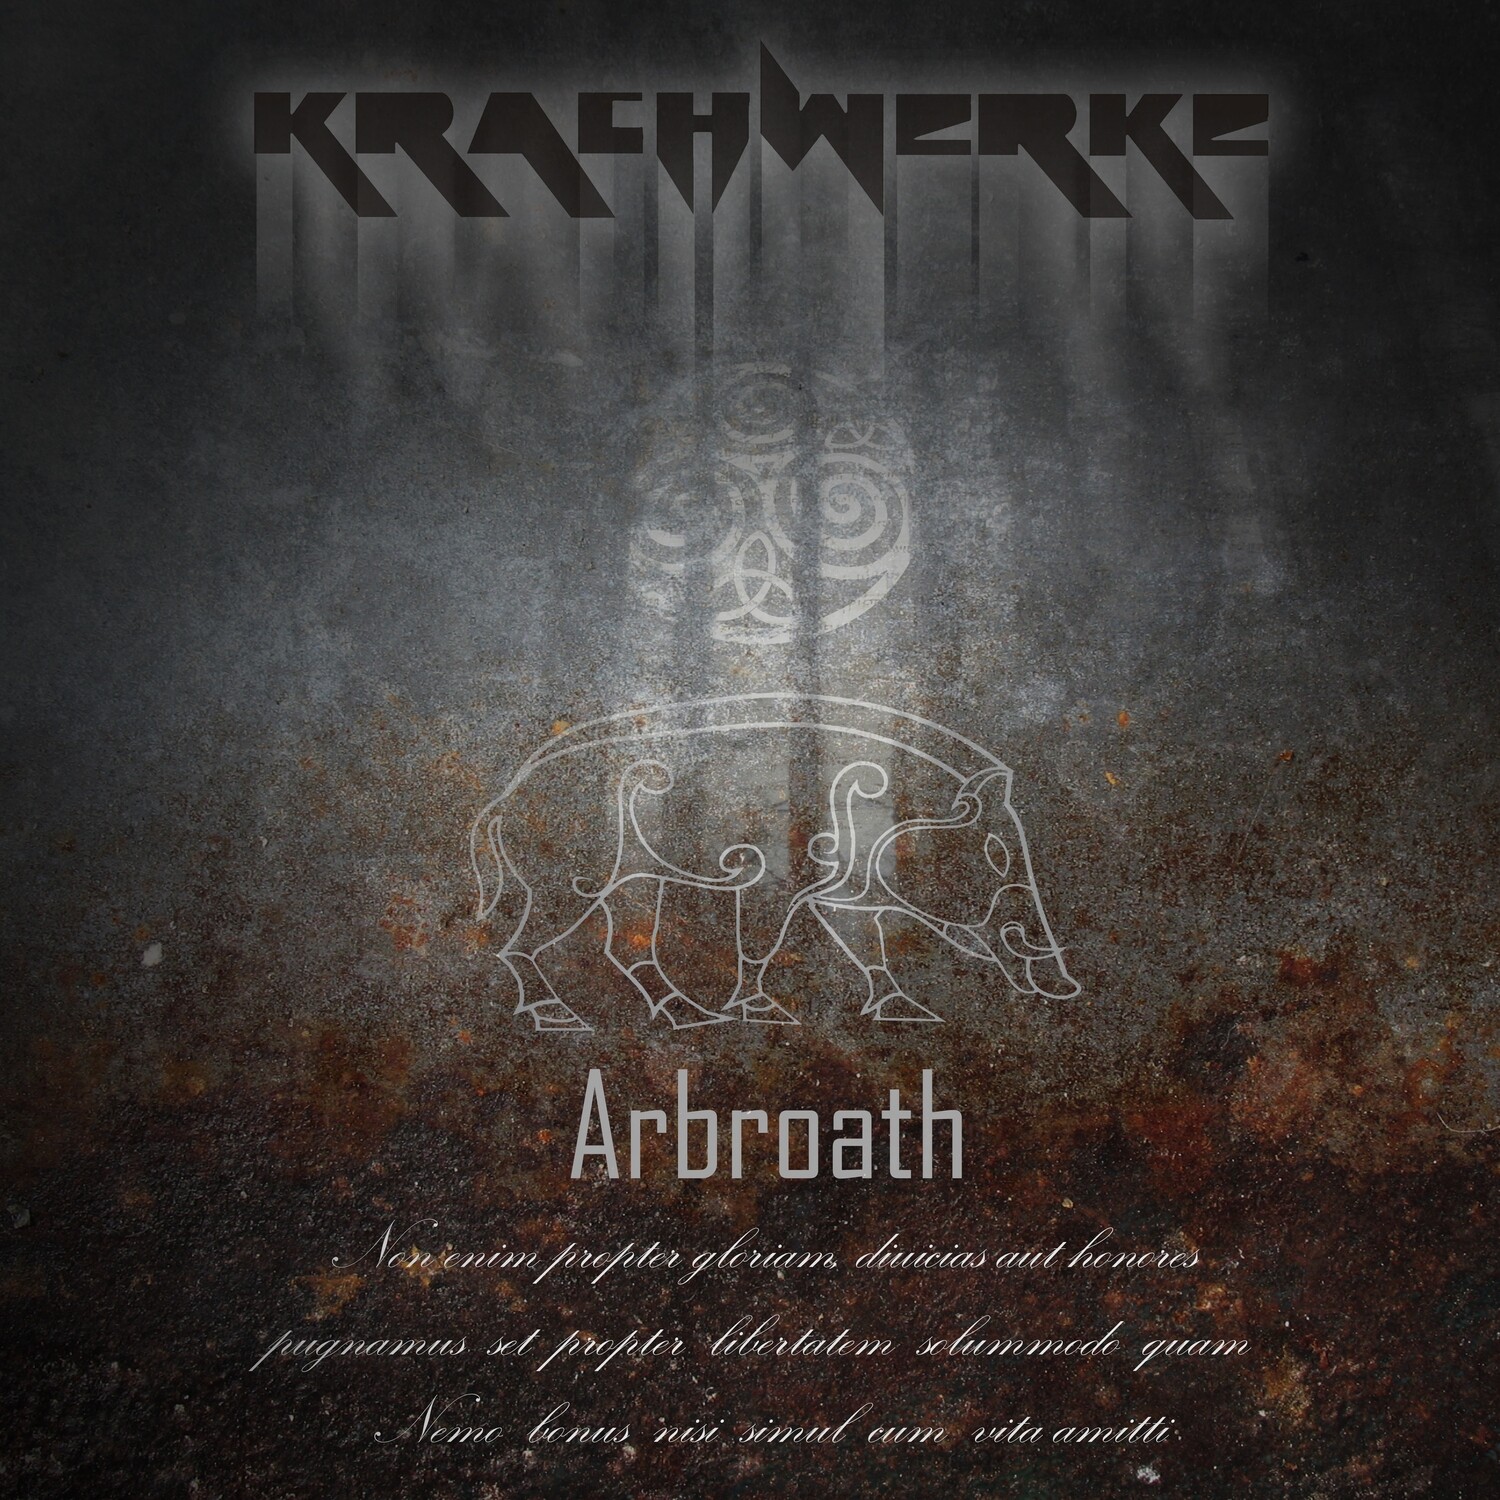 Arbroath by Krachwerke